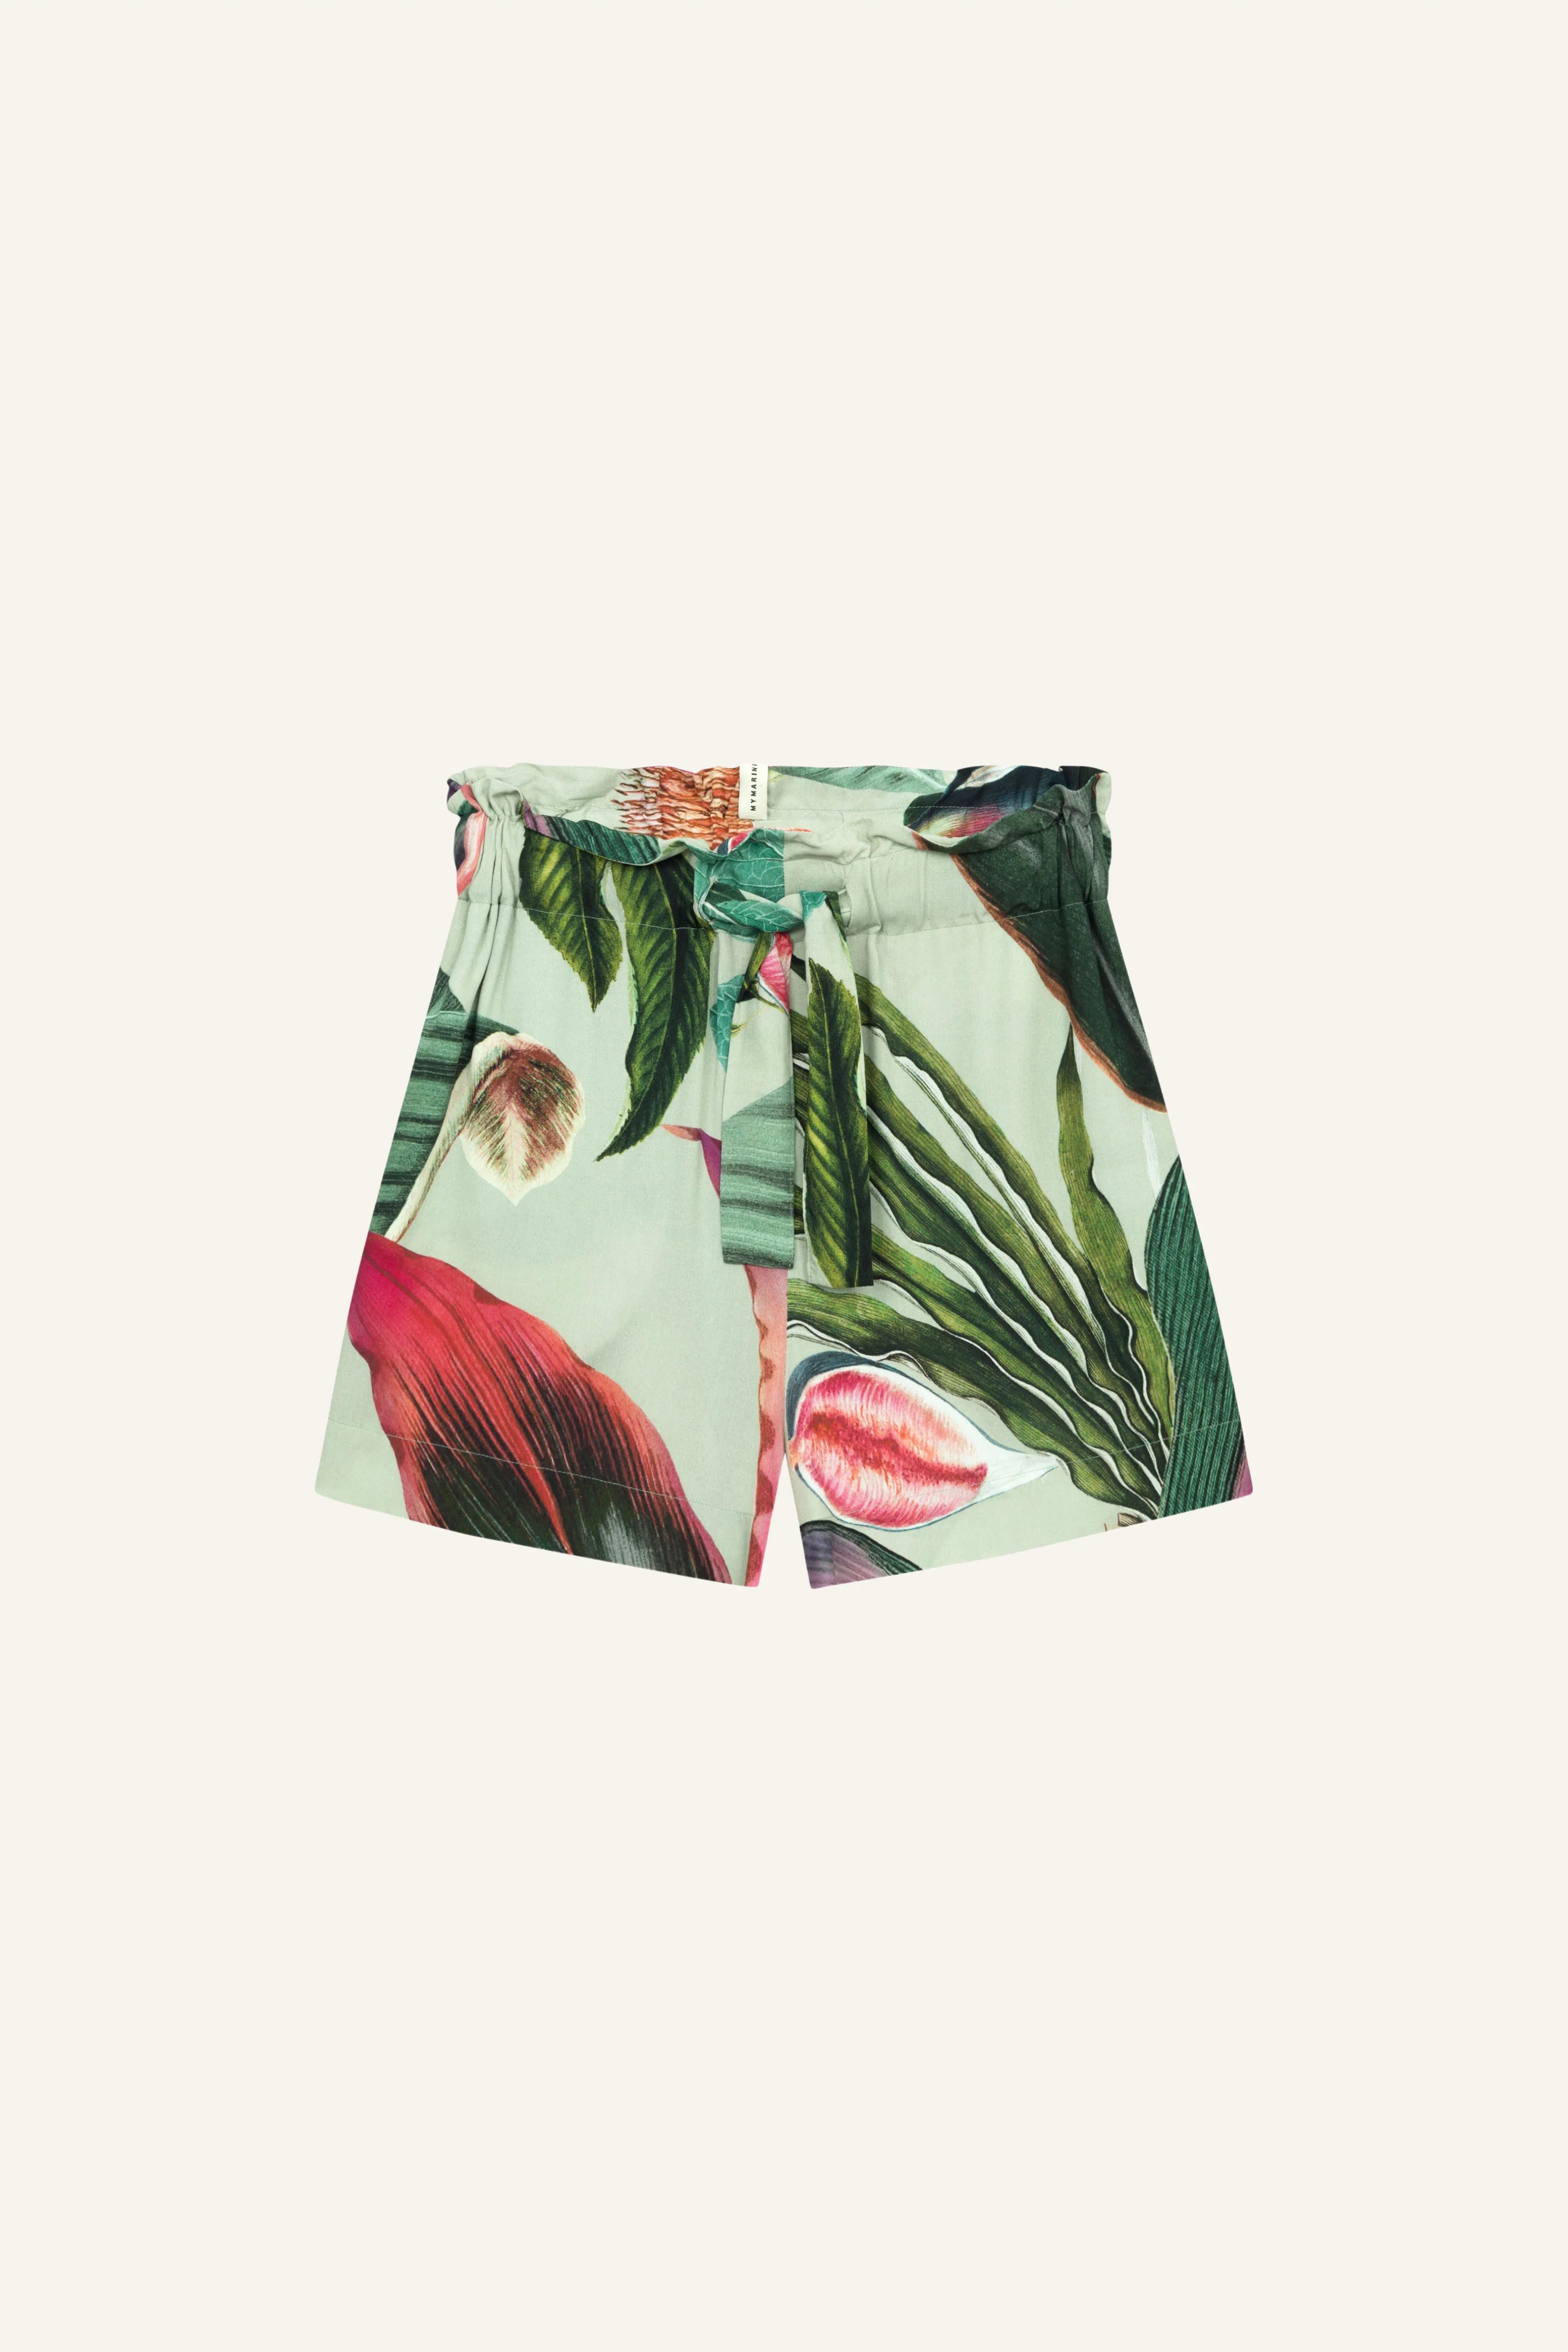 NEW SUMMER '24: Discover the new MYMARINI swimwear designs